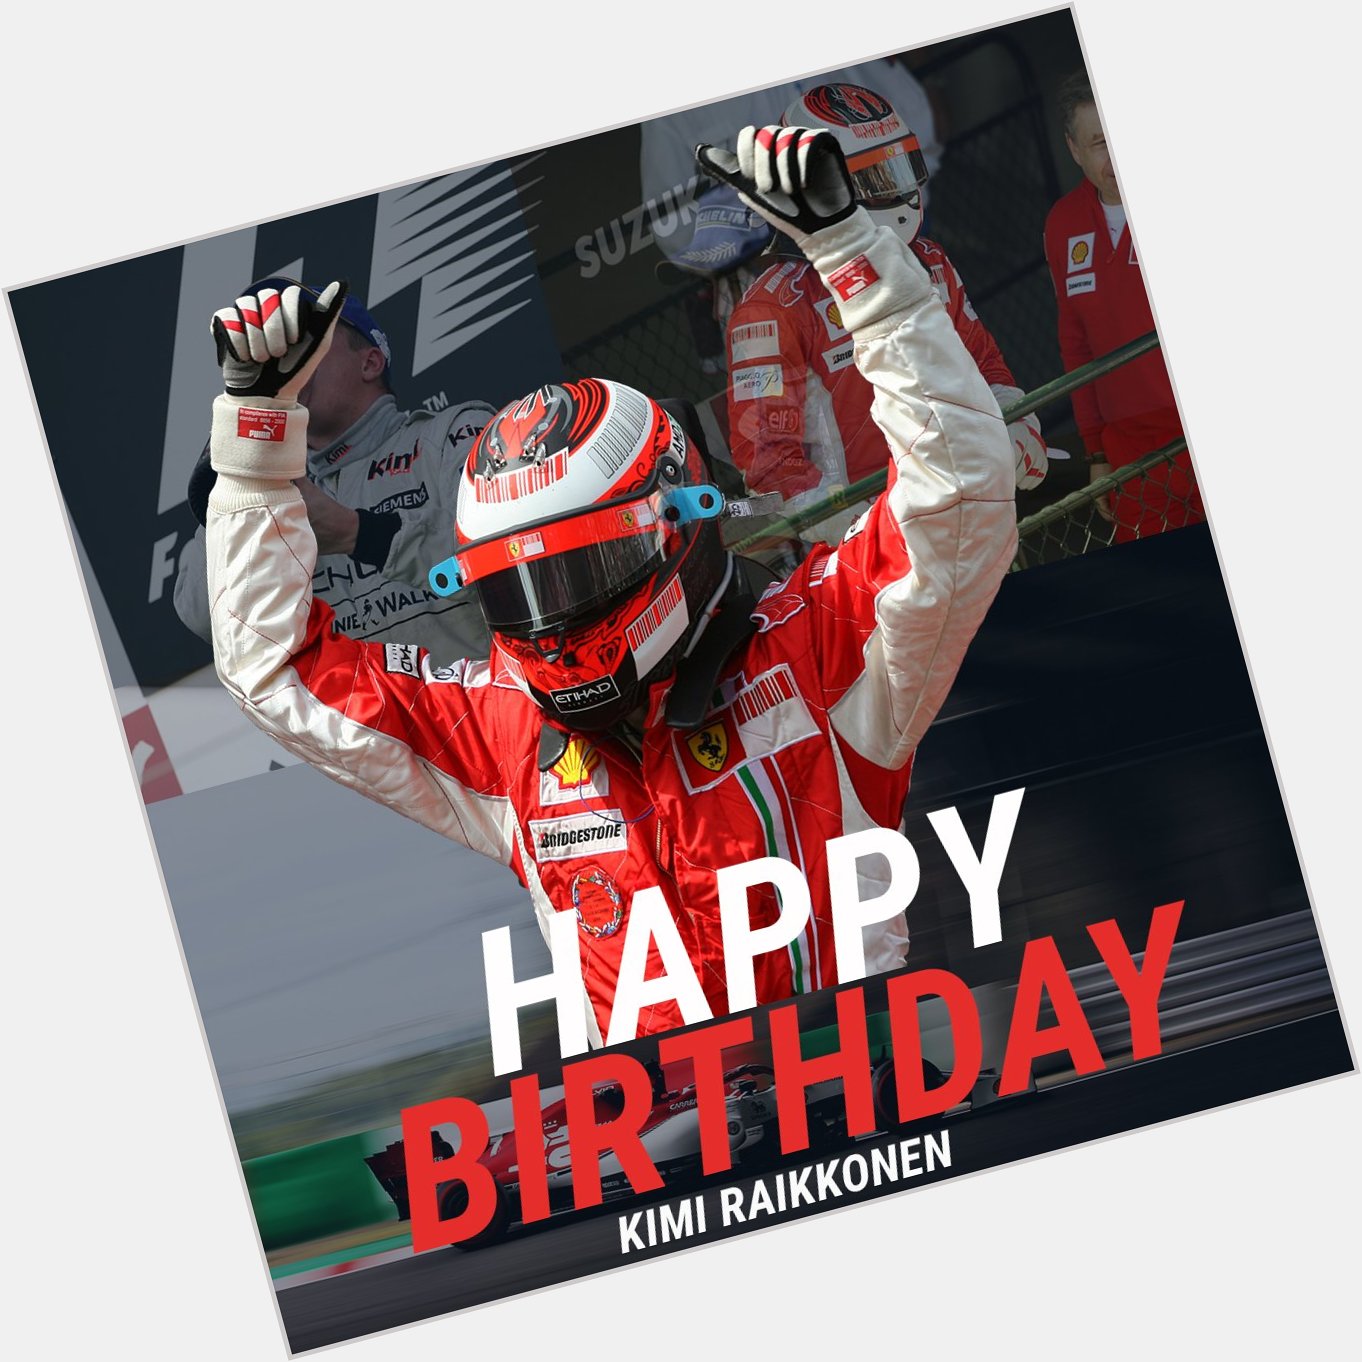  309 Race Starts 21 Victories 1 World Championship 103 Podiums

Happy Birthday, Kimi Raikkonen!   